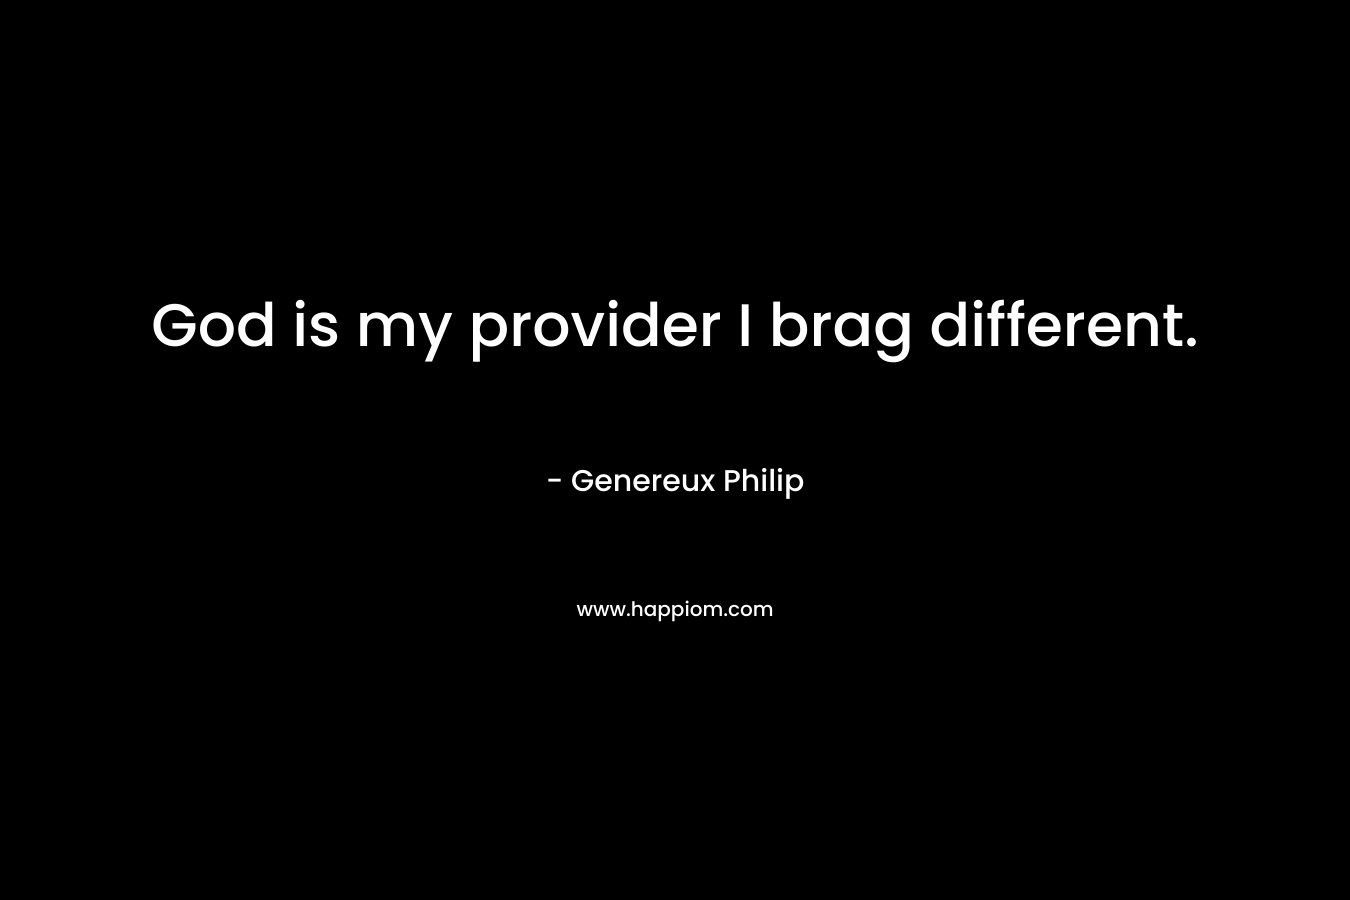 God is my provider I brag different.